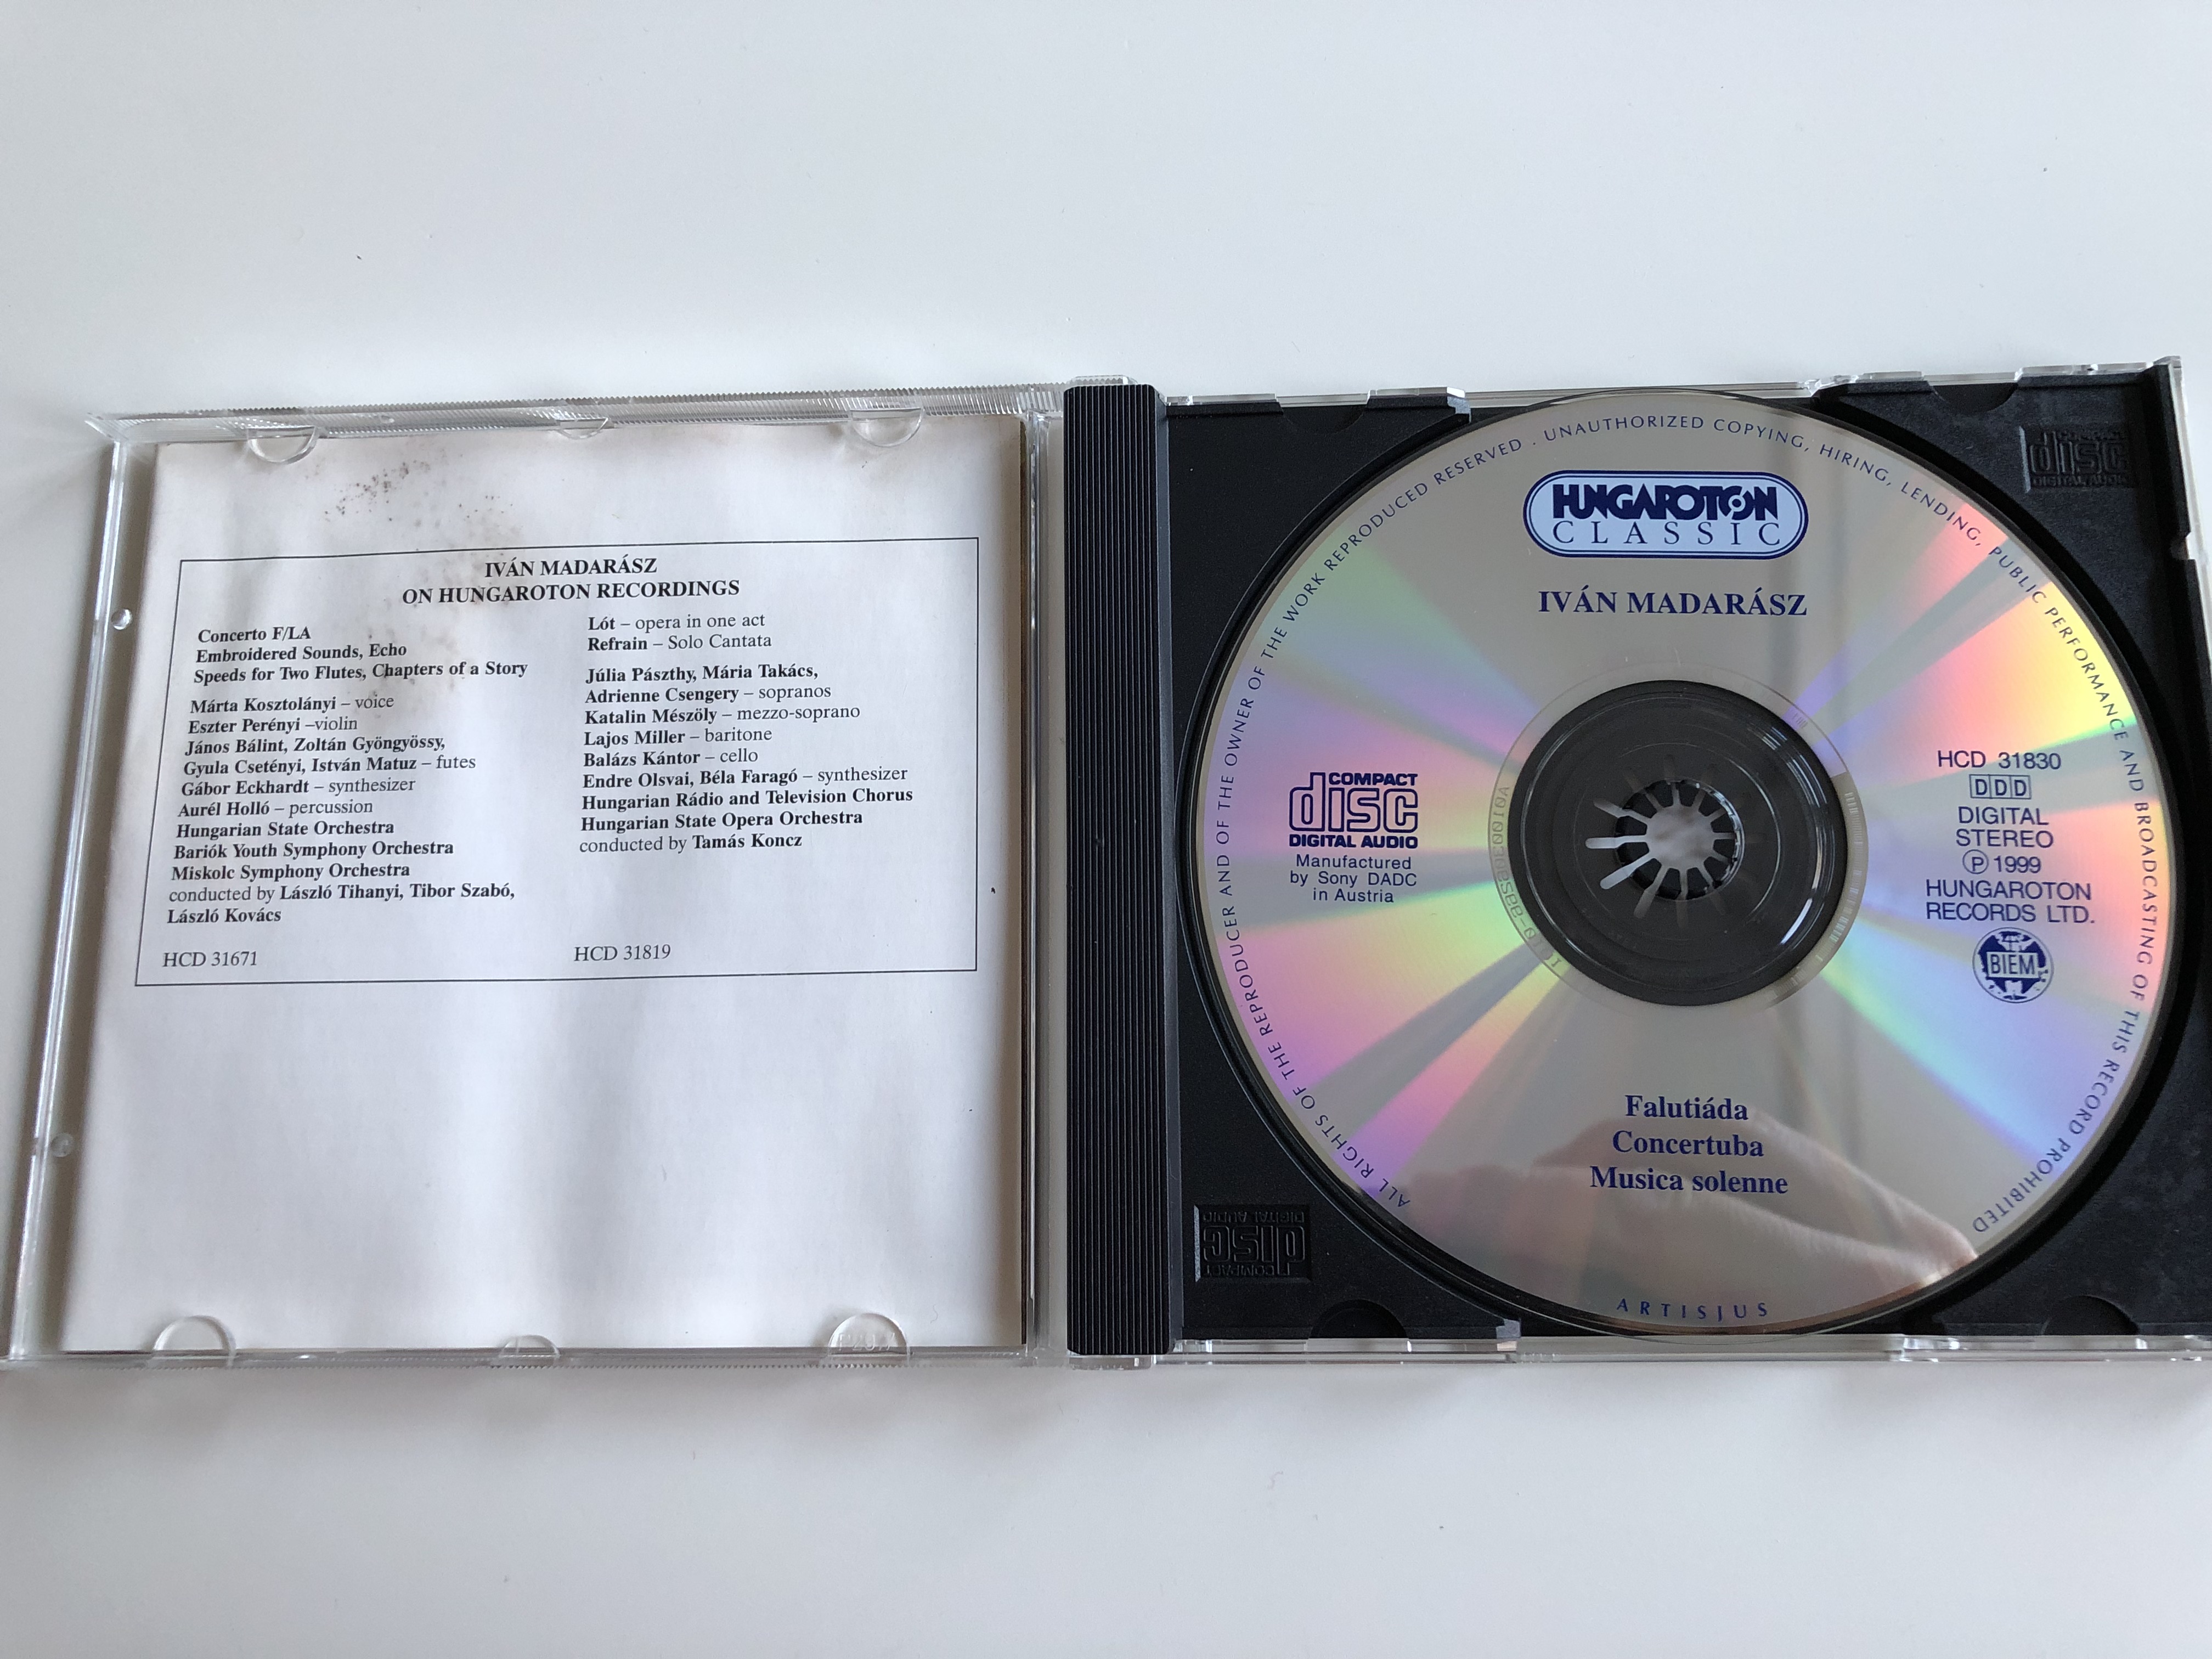 ivan-madarasz-flautiada-concertuba-musica-solenne-hungaroton-classic-audio-cd-1999-stereo-hcd-31830-7-.jpg